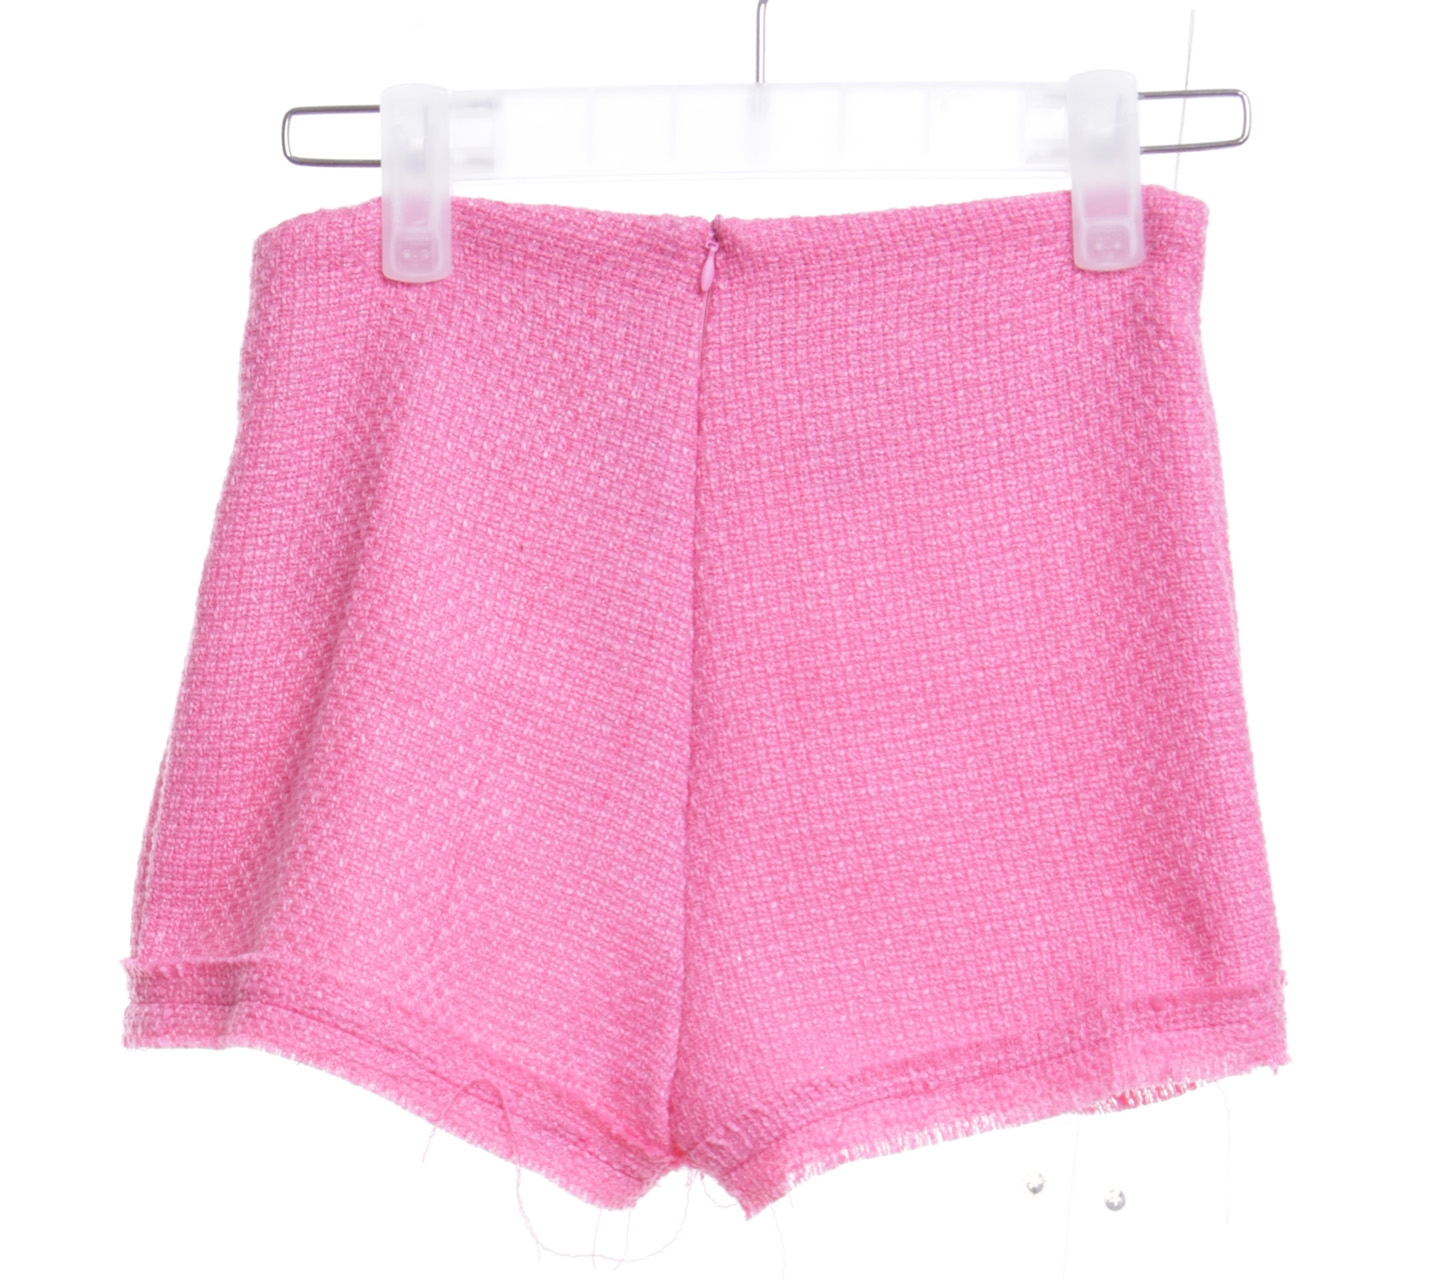 The Stylish Pink Knit Short Pants